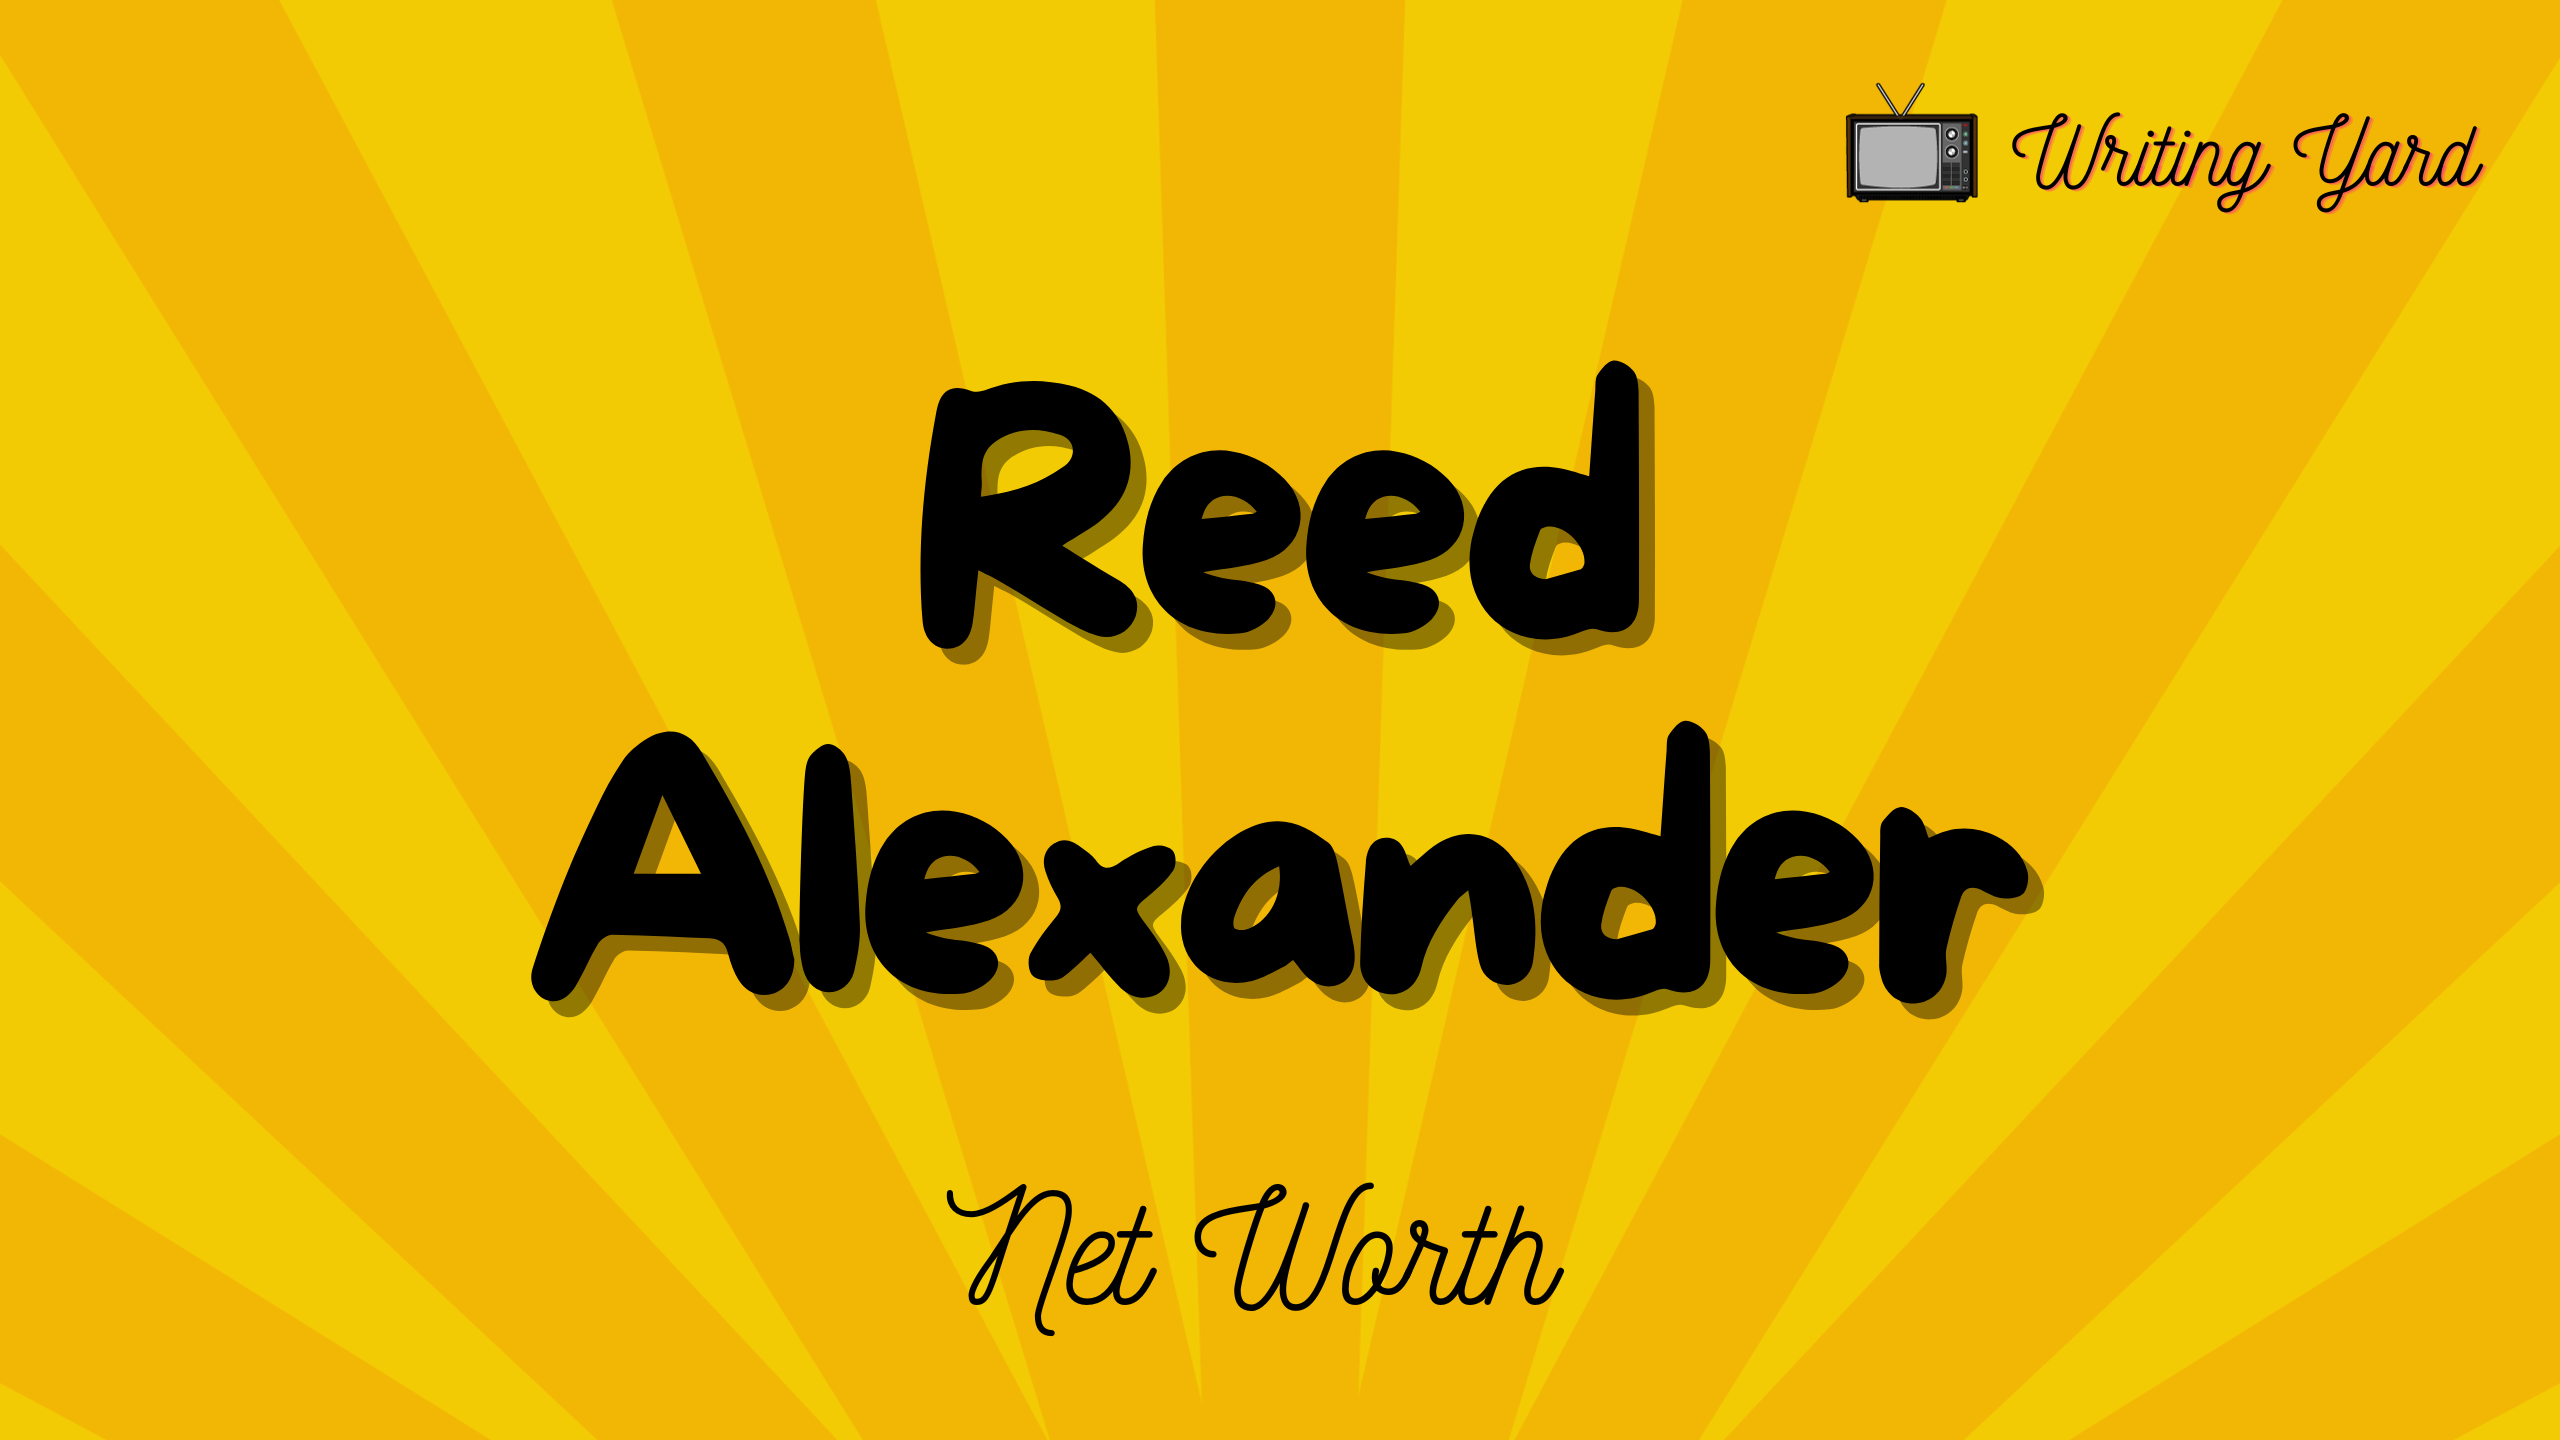 Reed Alexander Net Worth